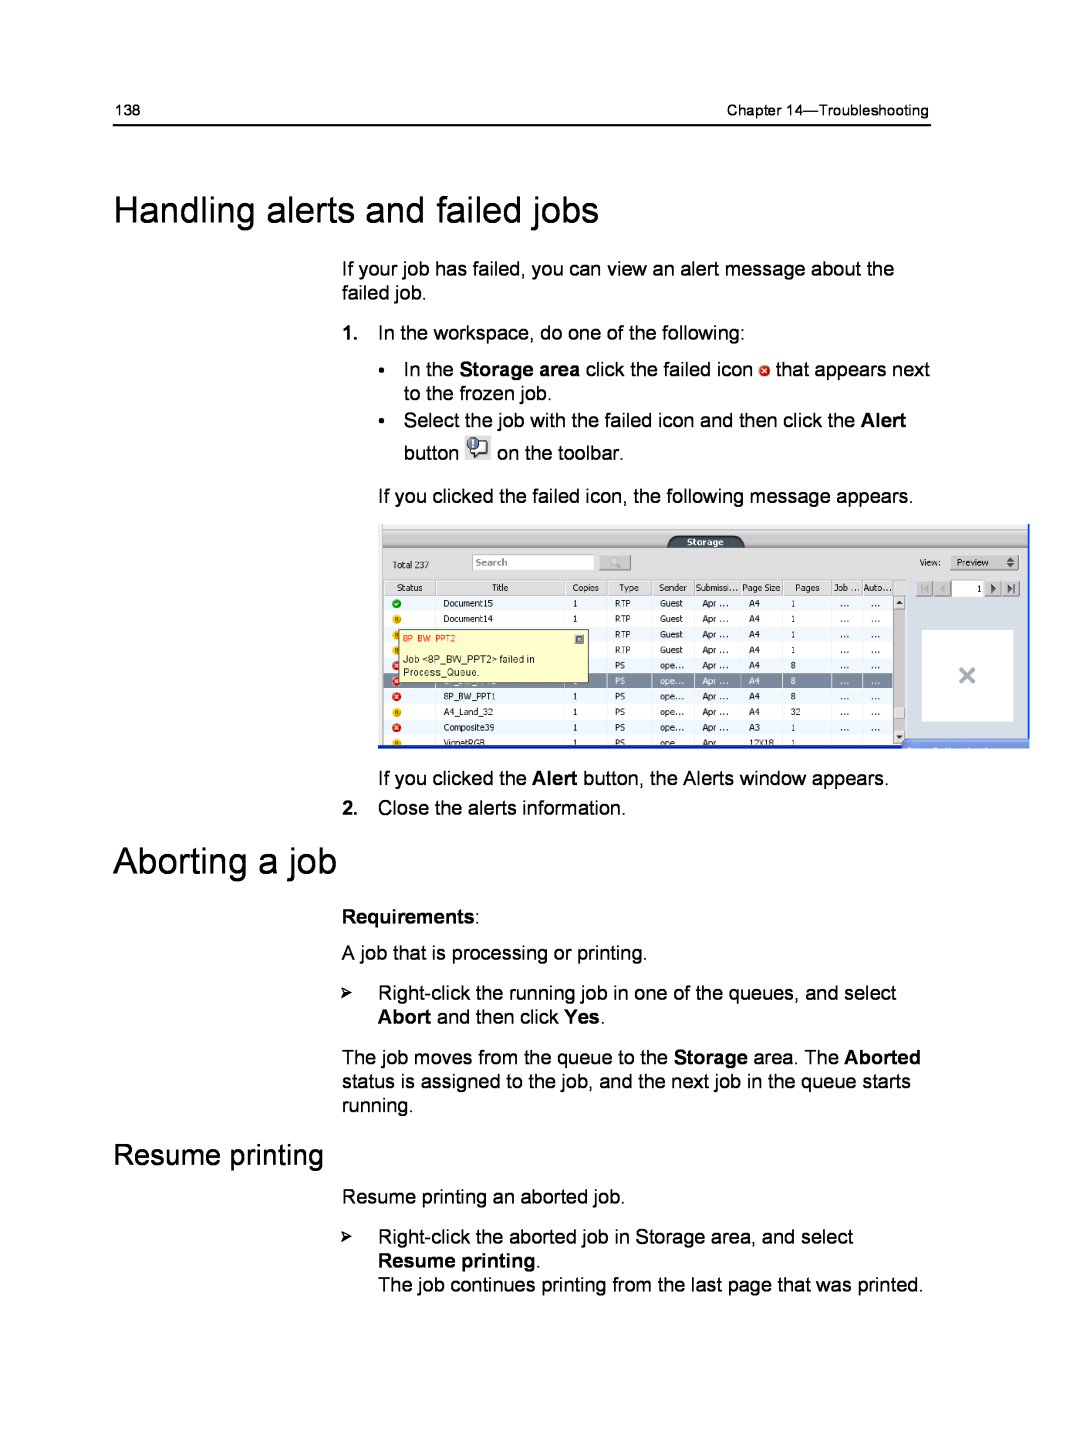 Xerox 560, 550 manual Handling alerts and failed jobs, Aborting a job, Resume printing, Requirements 